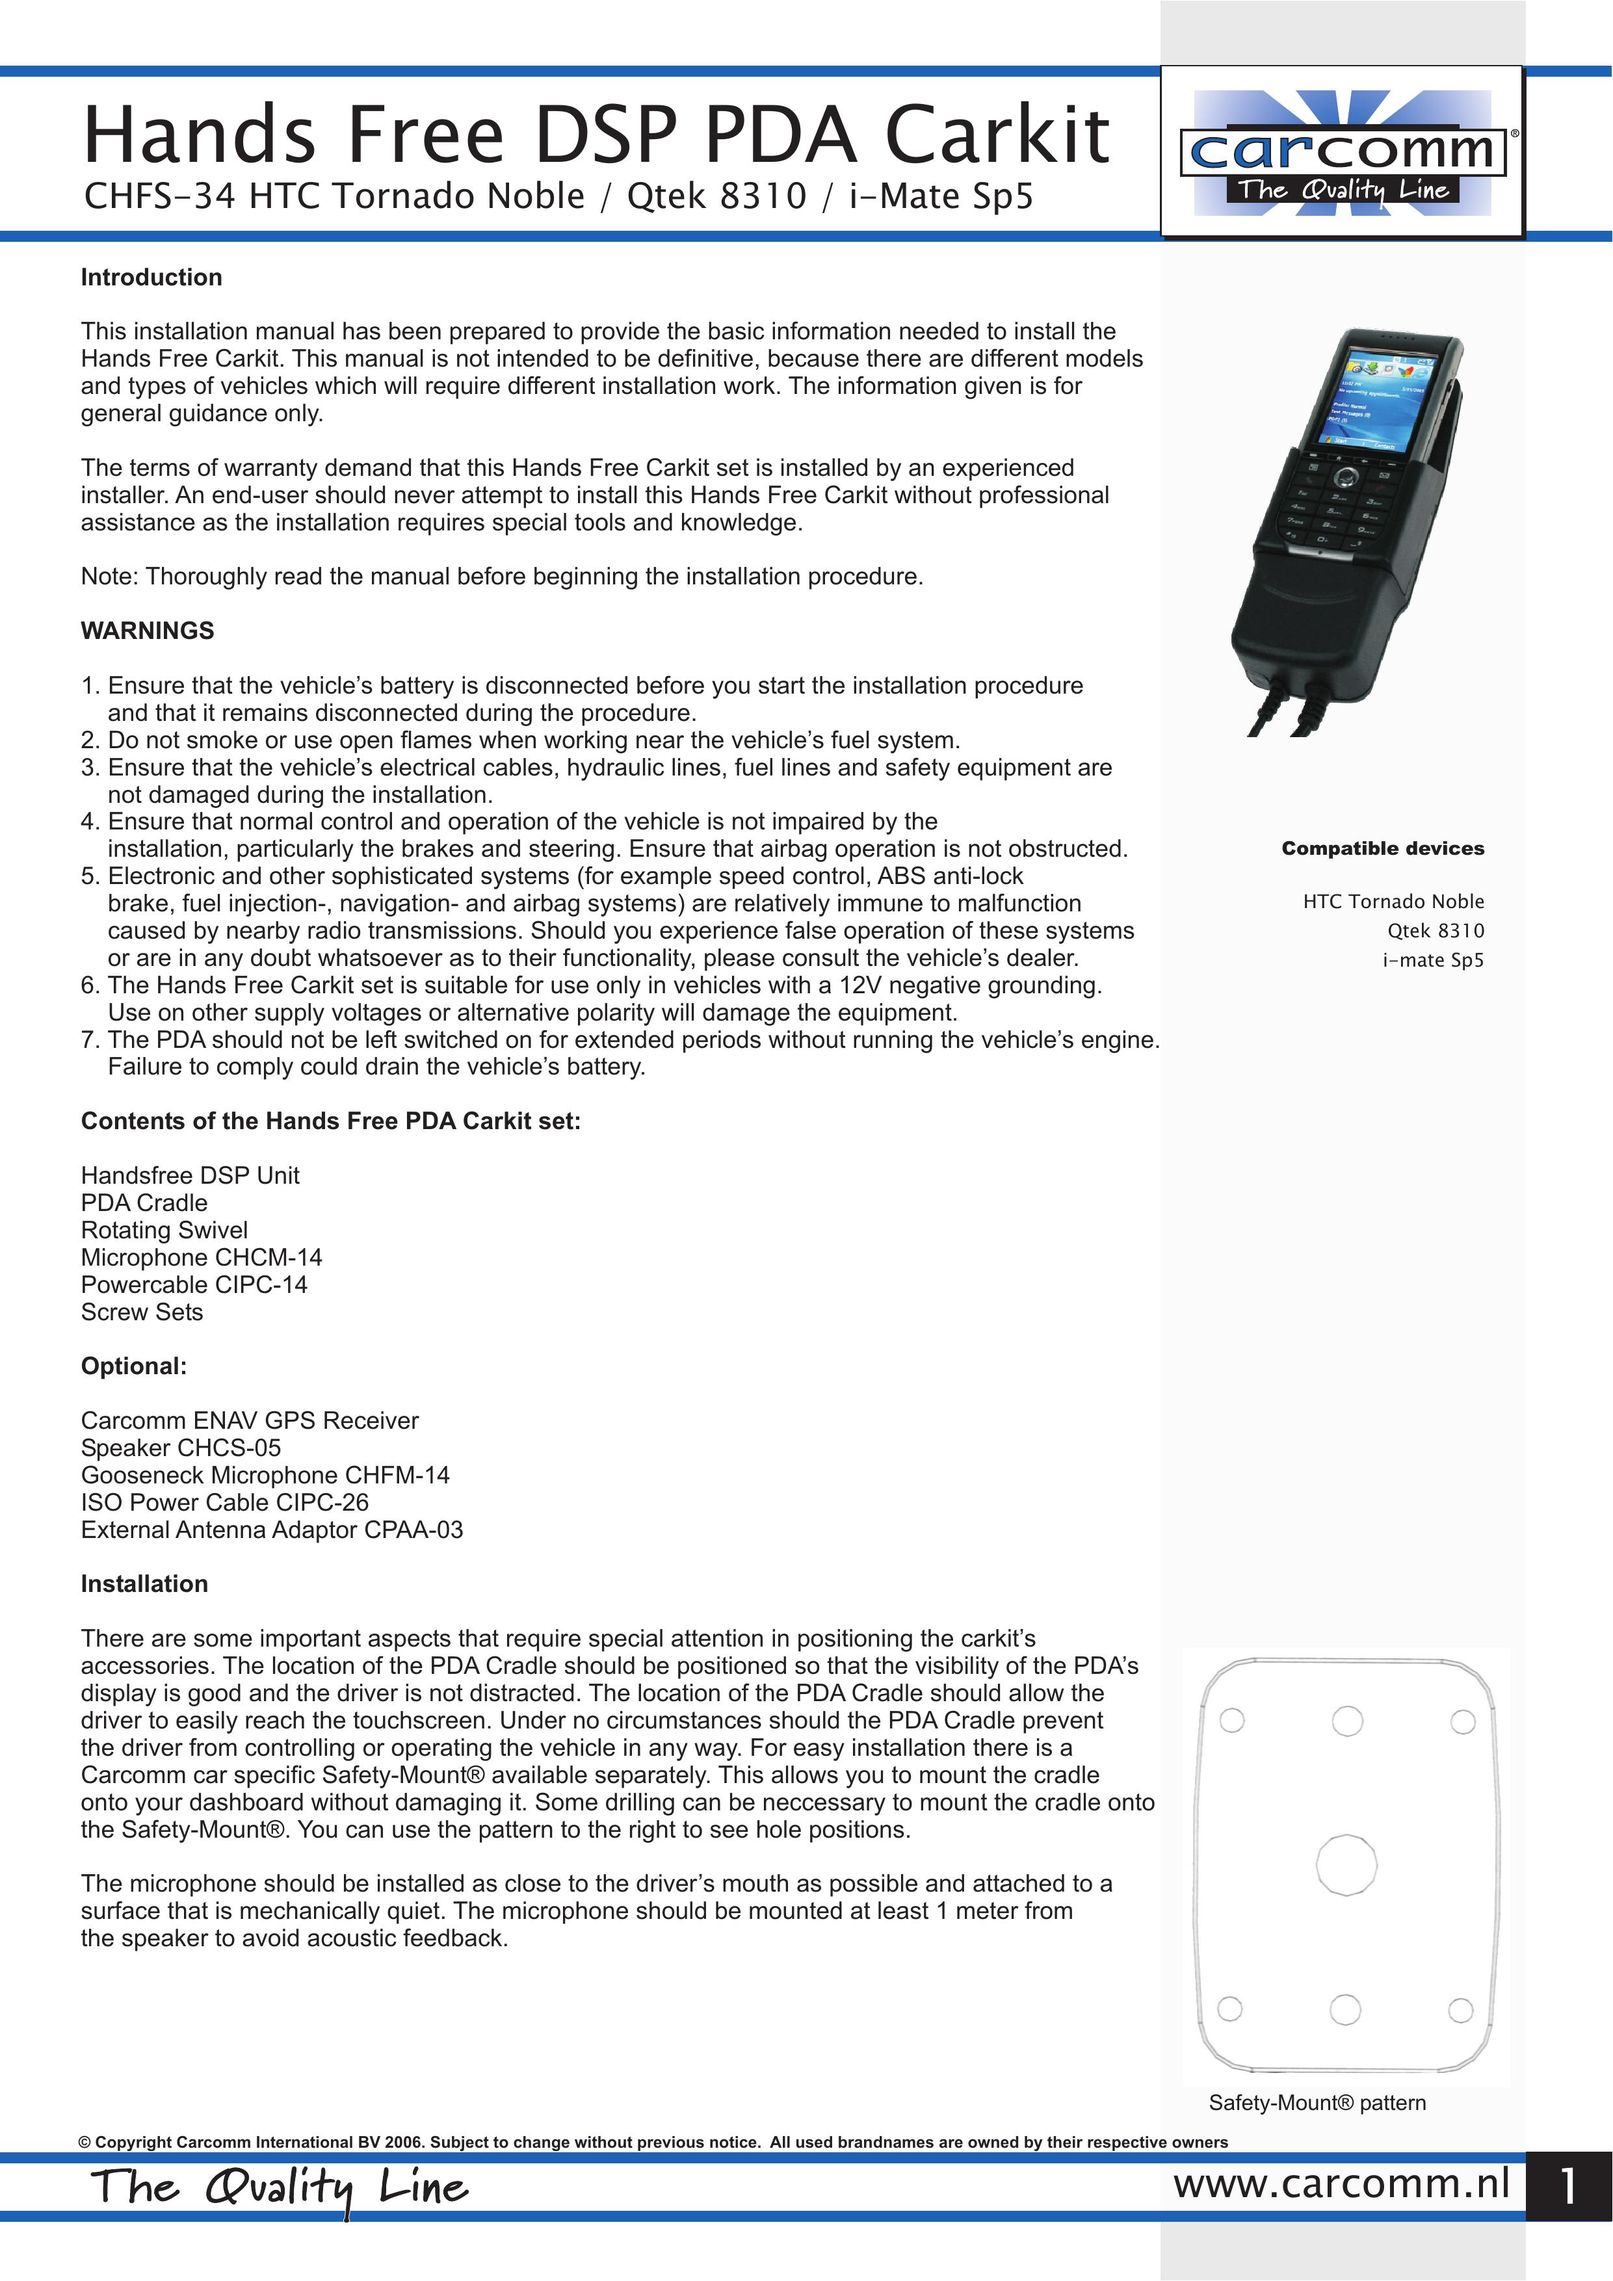 Carcomm i-Mate-Sp5 Car Speaker User Manual